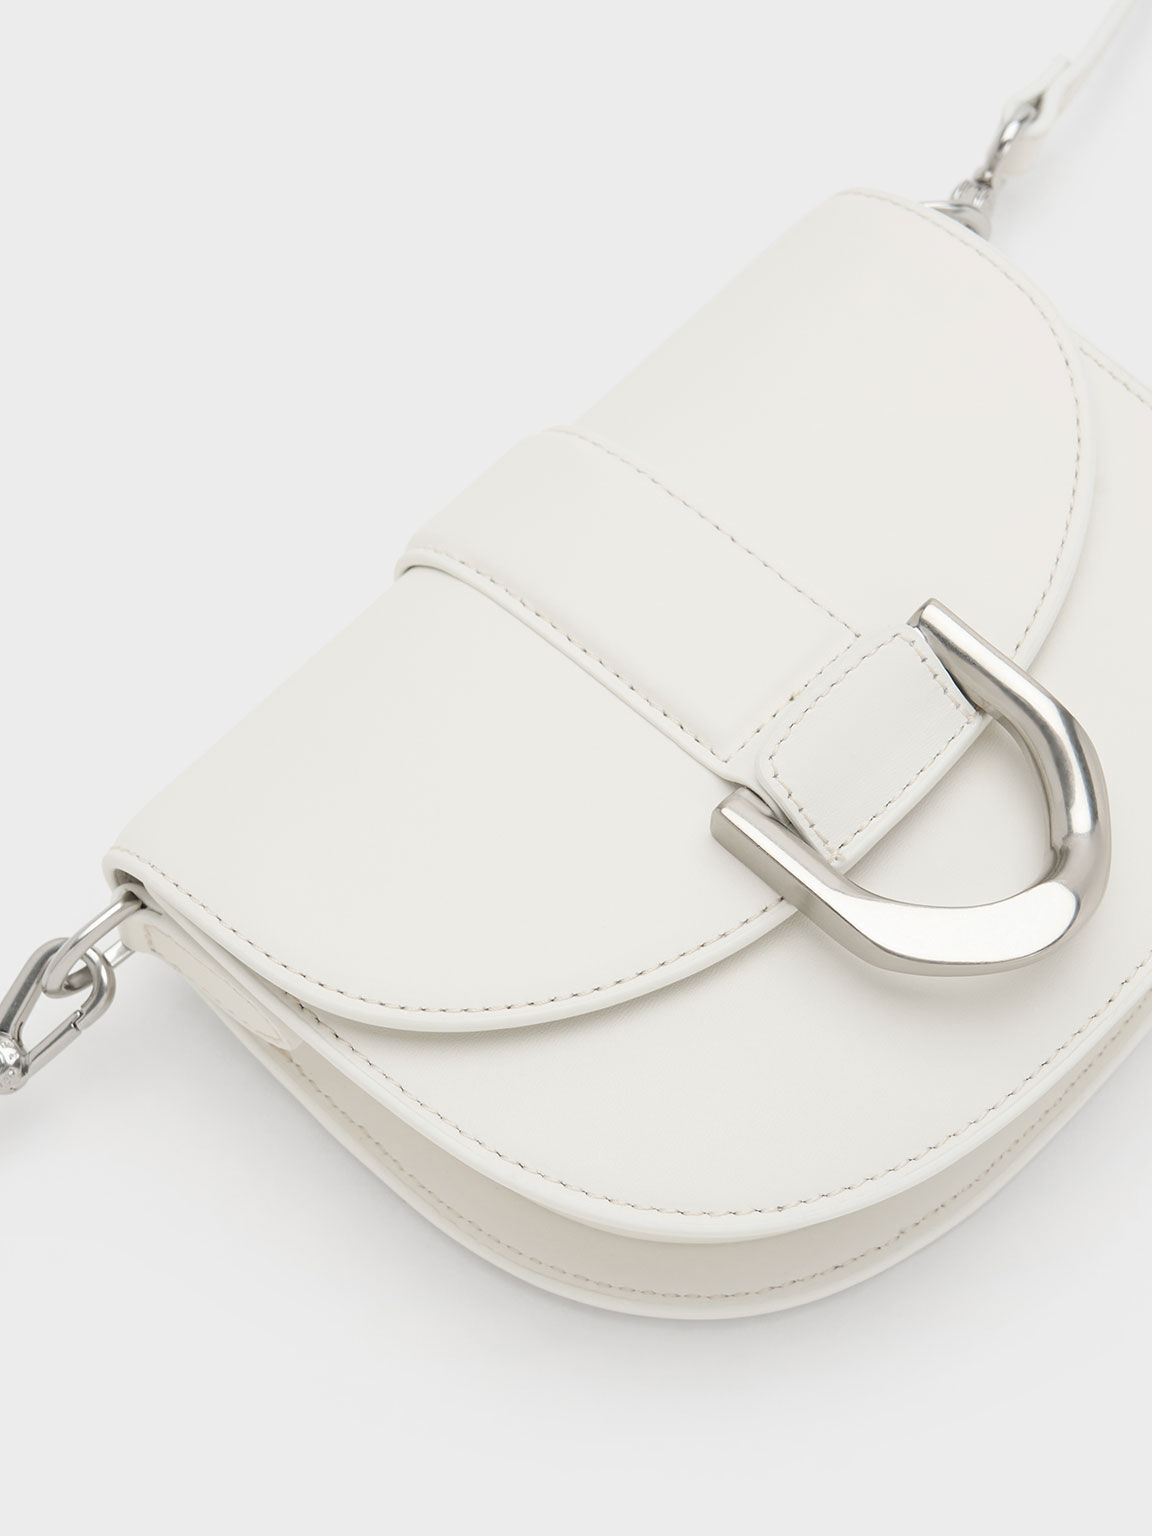 Mini Gabine Leather Saddle Bag, White, hi-res